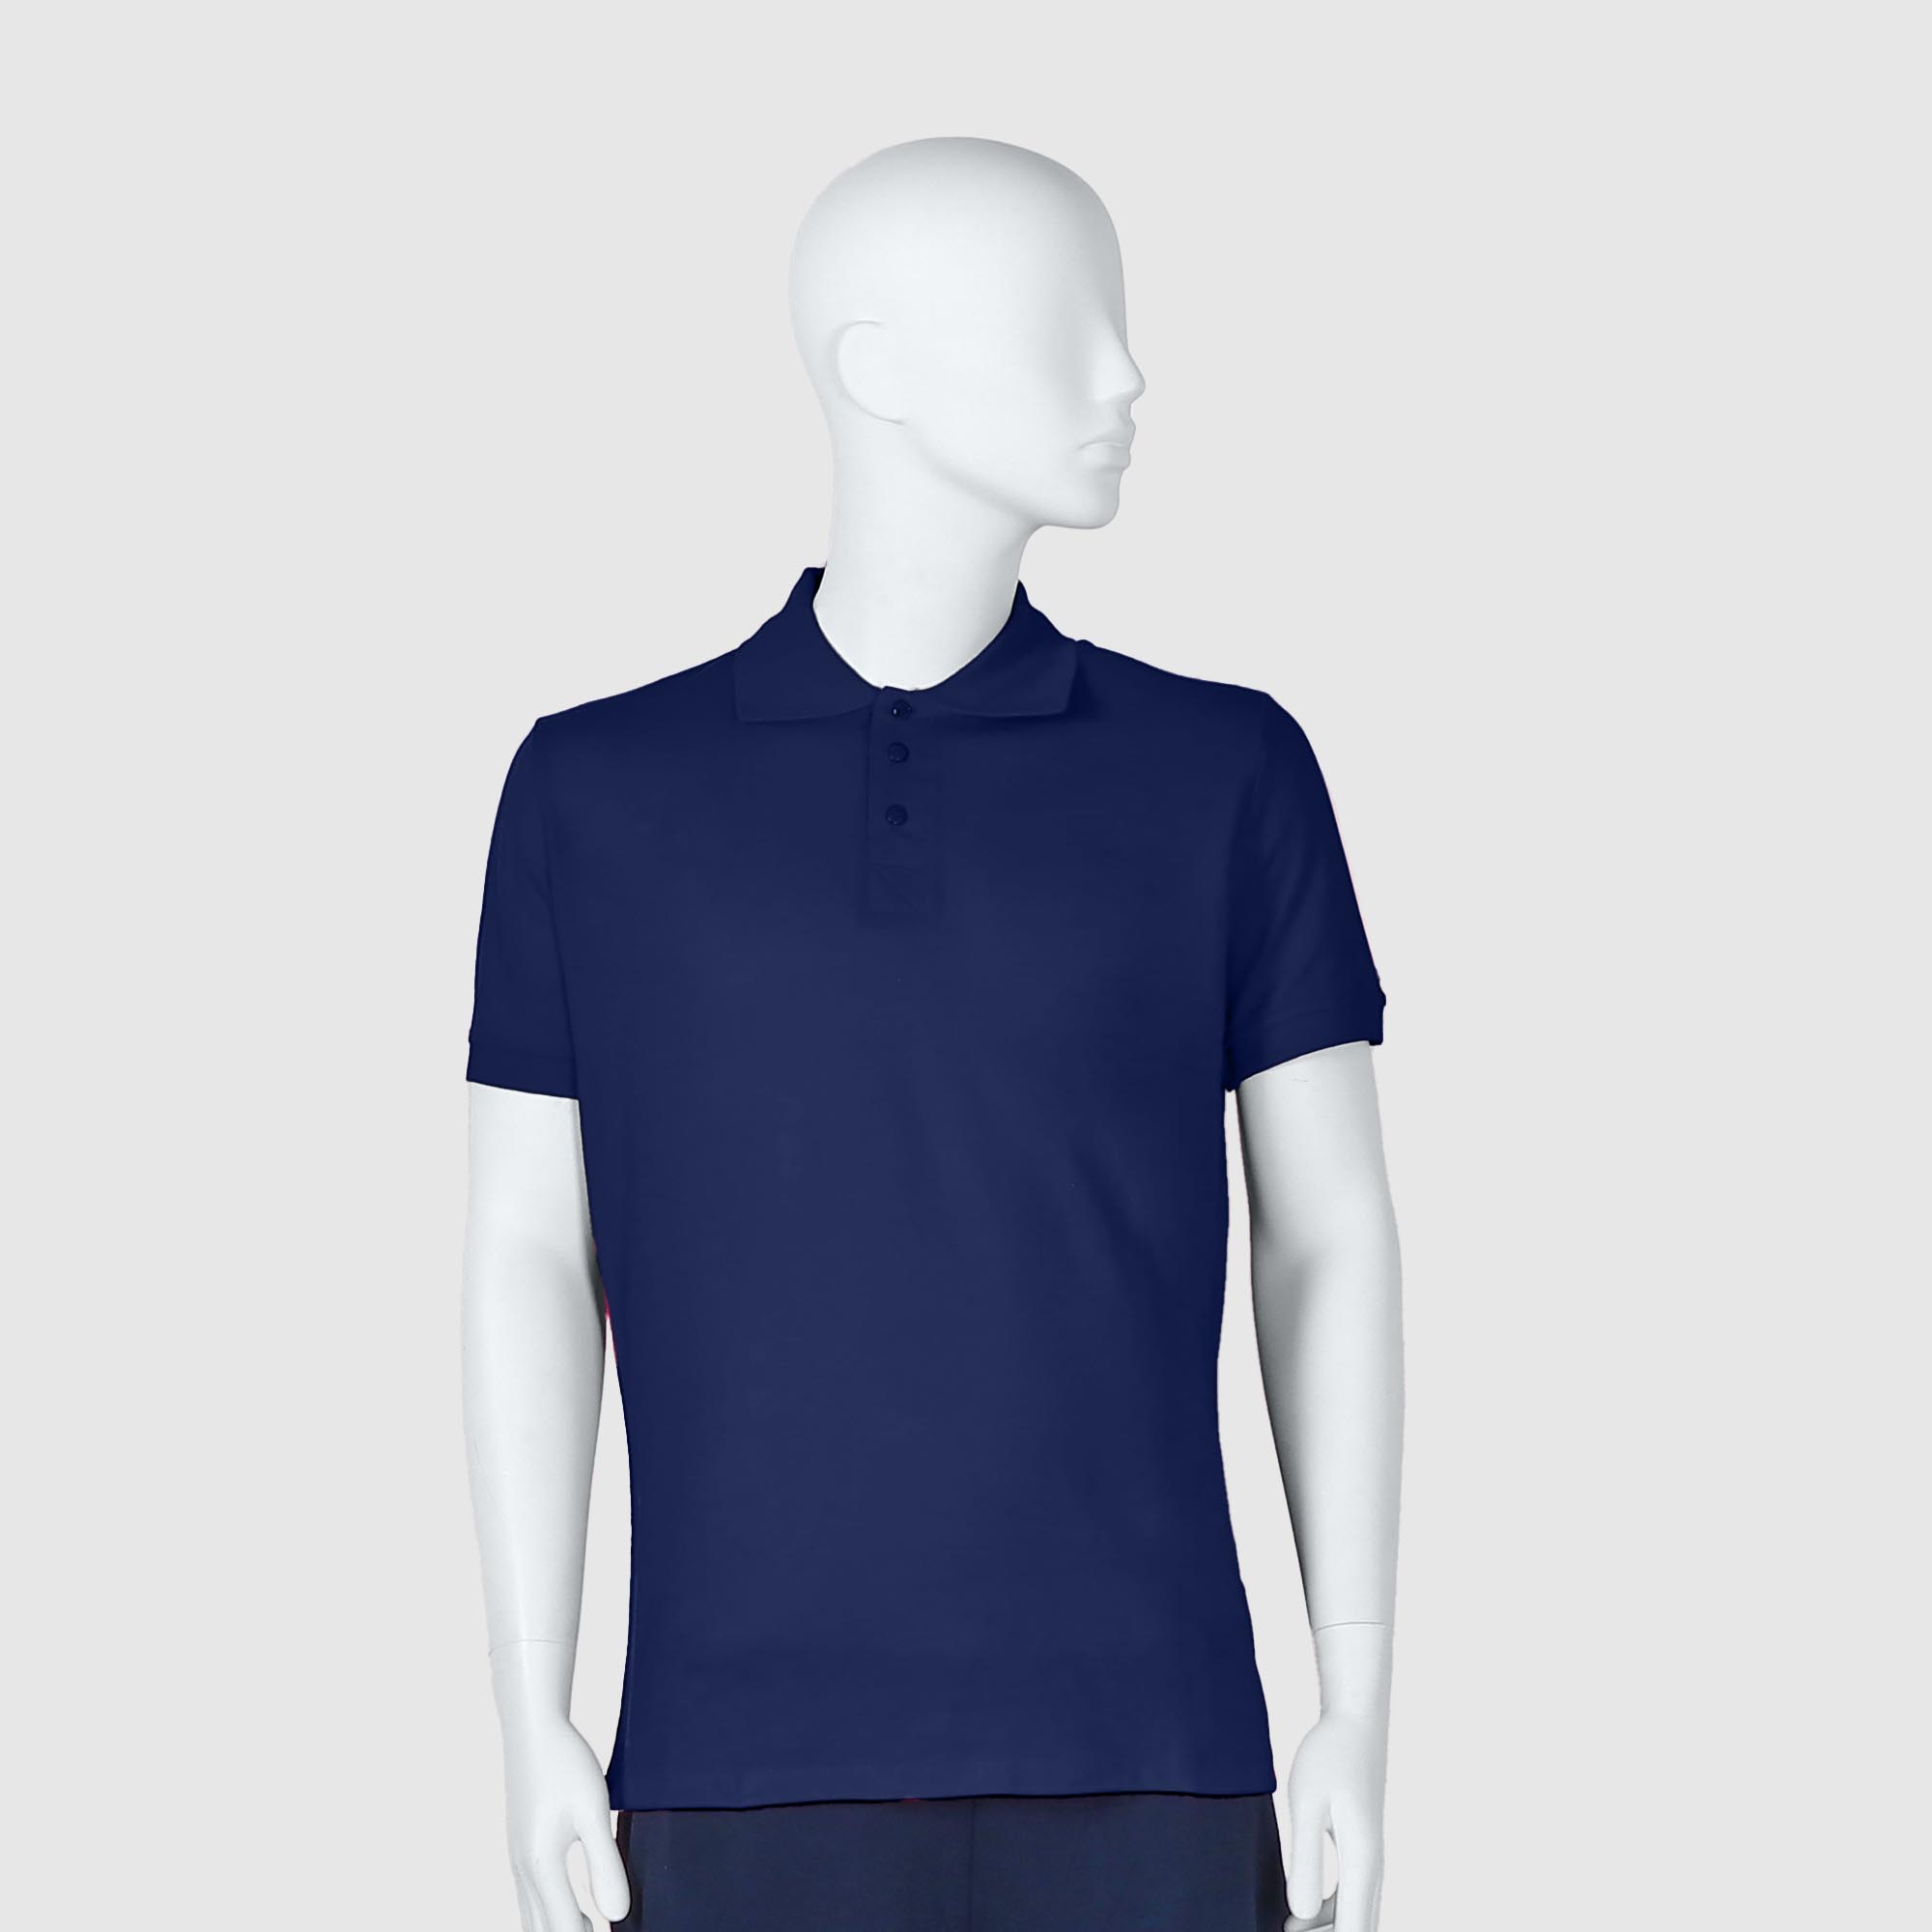 Мужская футболка-поло Diva Teks синяя (DTD-10), цвет синий, размер 46-48 - фото 1